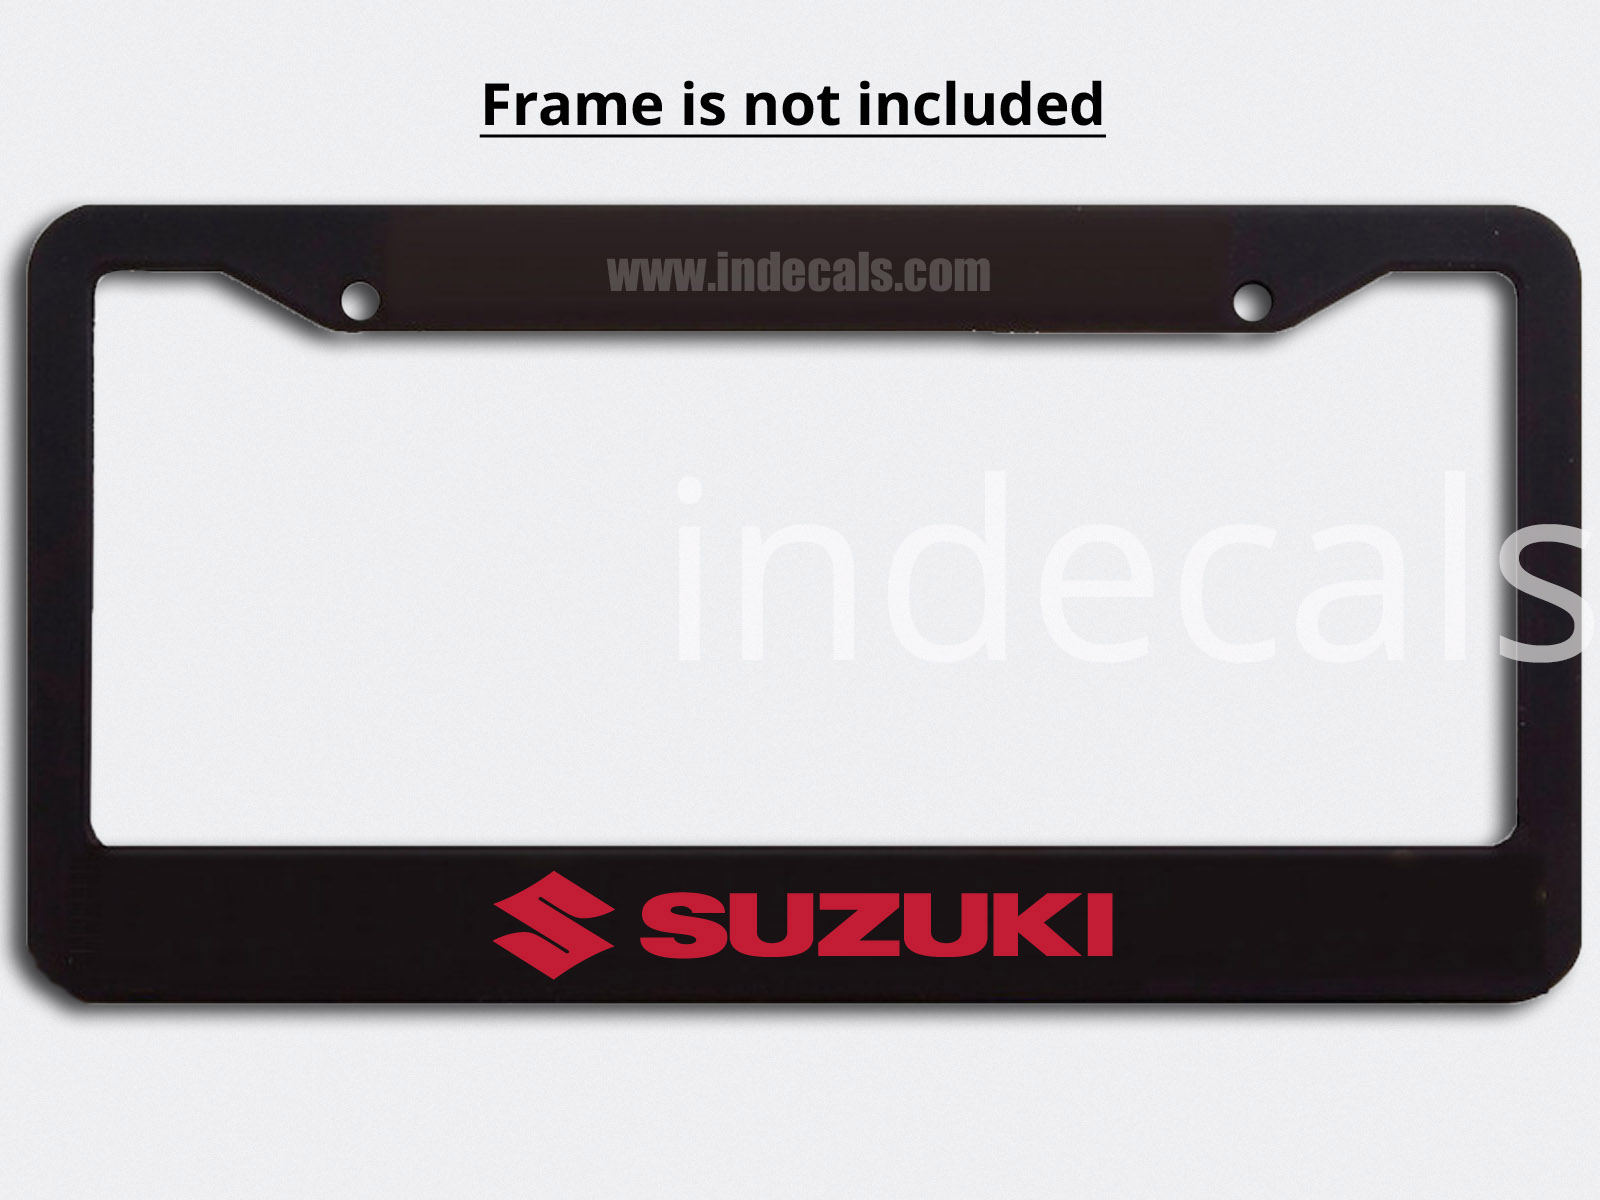 3 x Suzuki Stickers for Plate Frame - Red